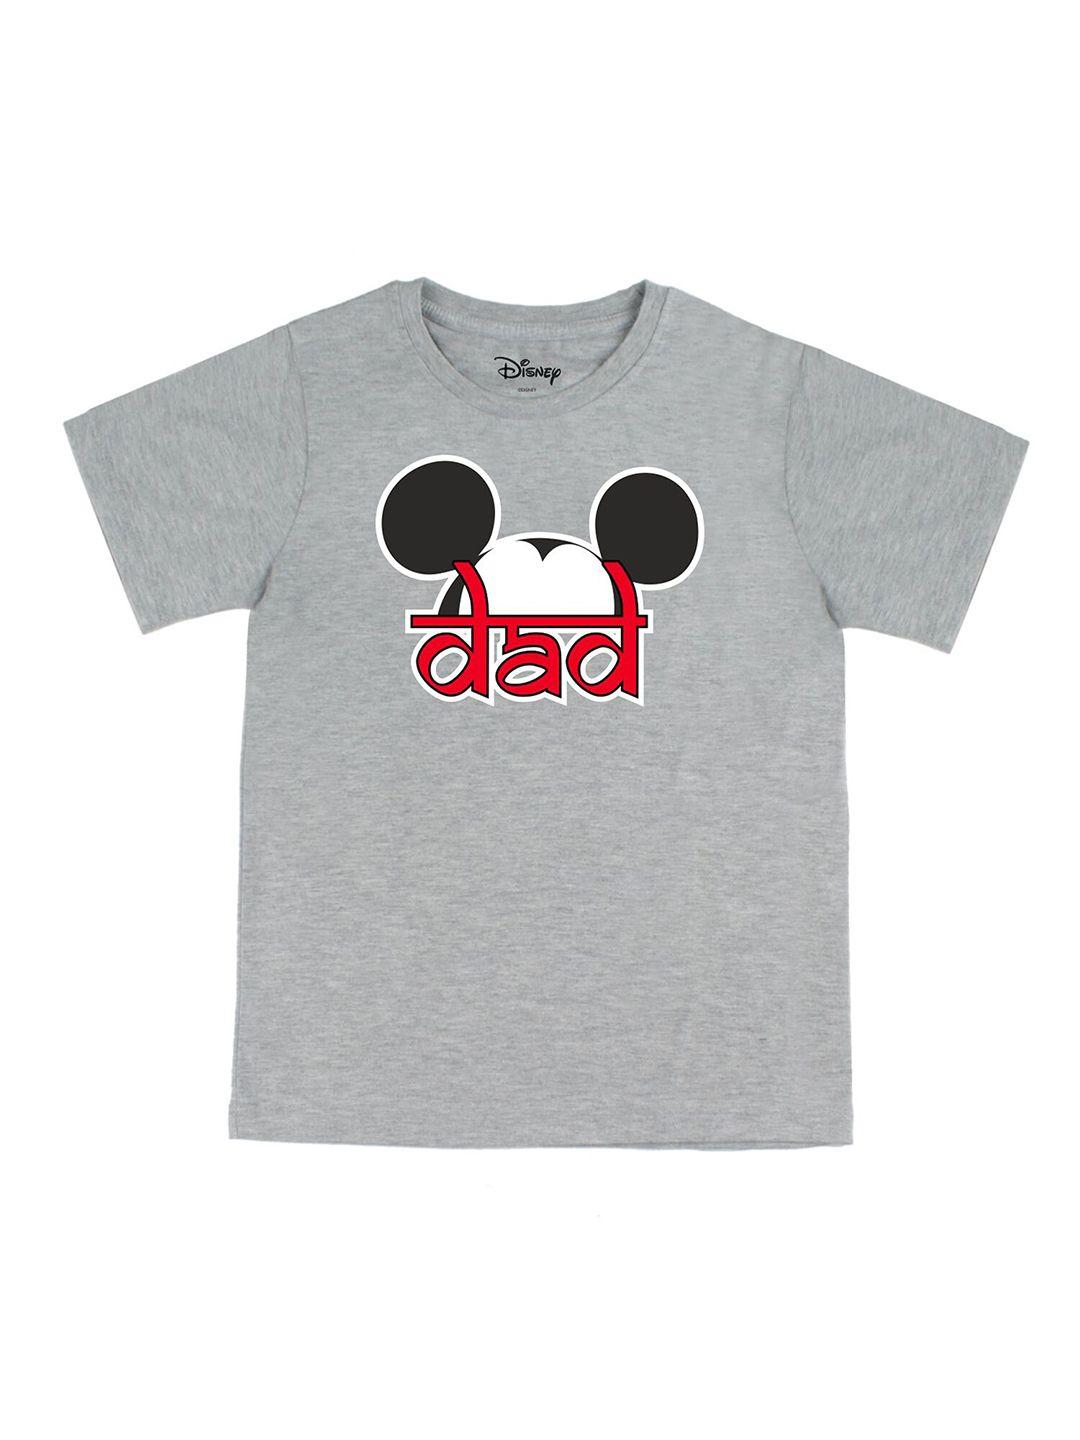 disney by wear your mind boys grey printed applique t-shirt